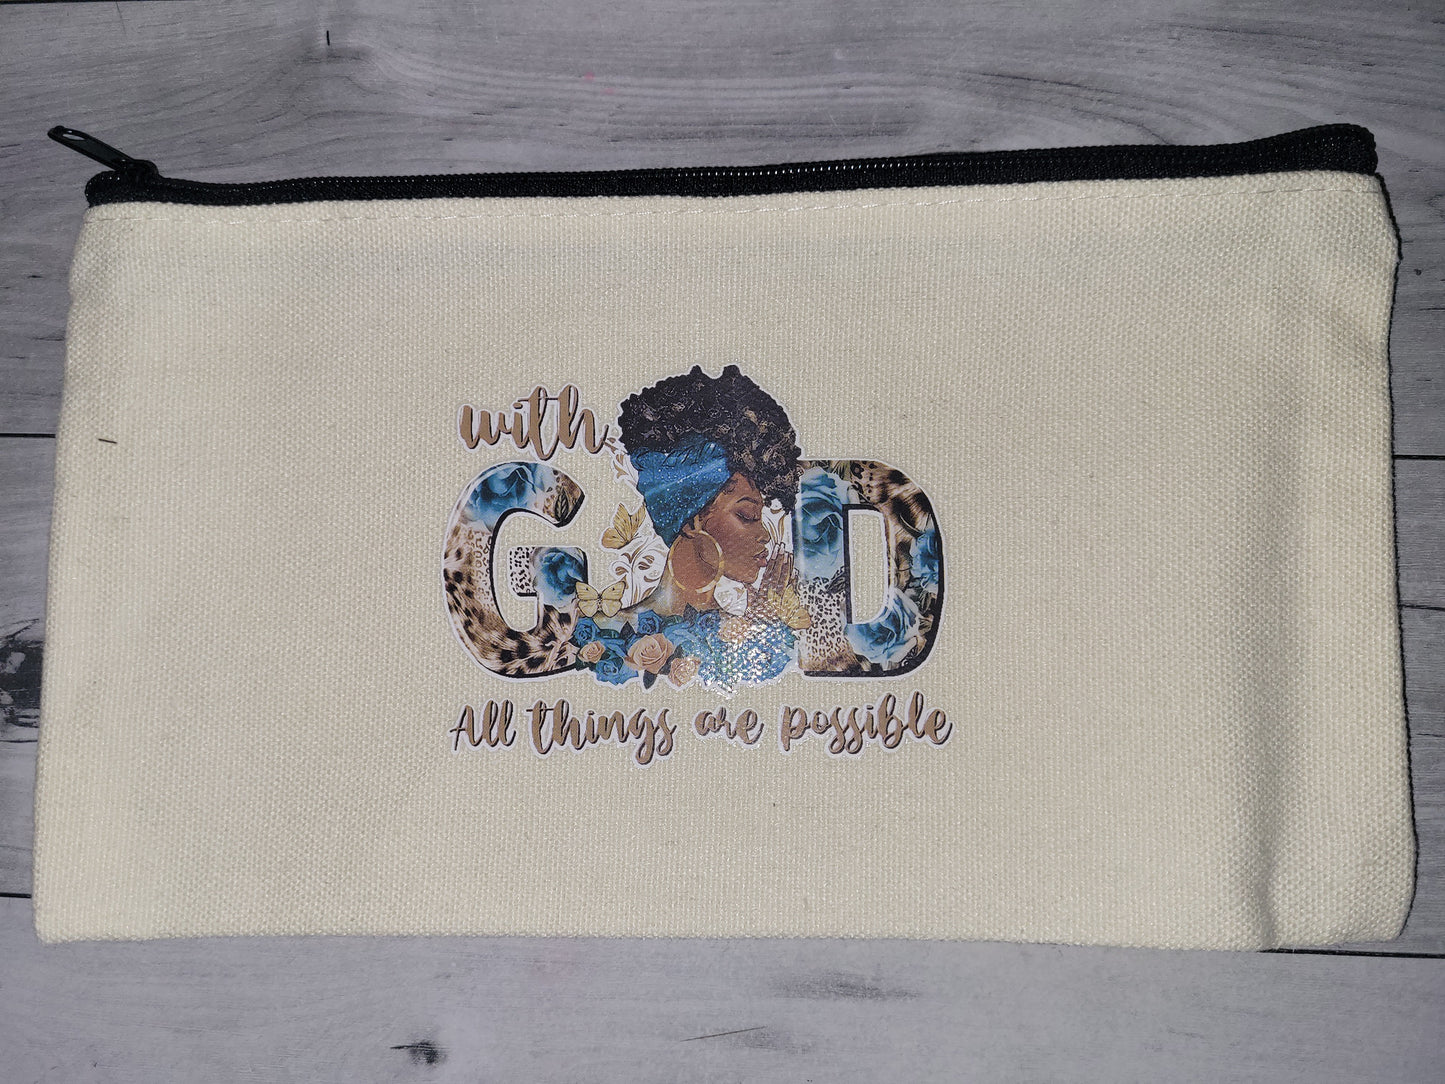 "With God" Make-up Bag